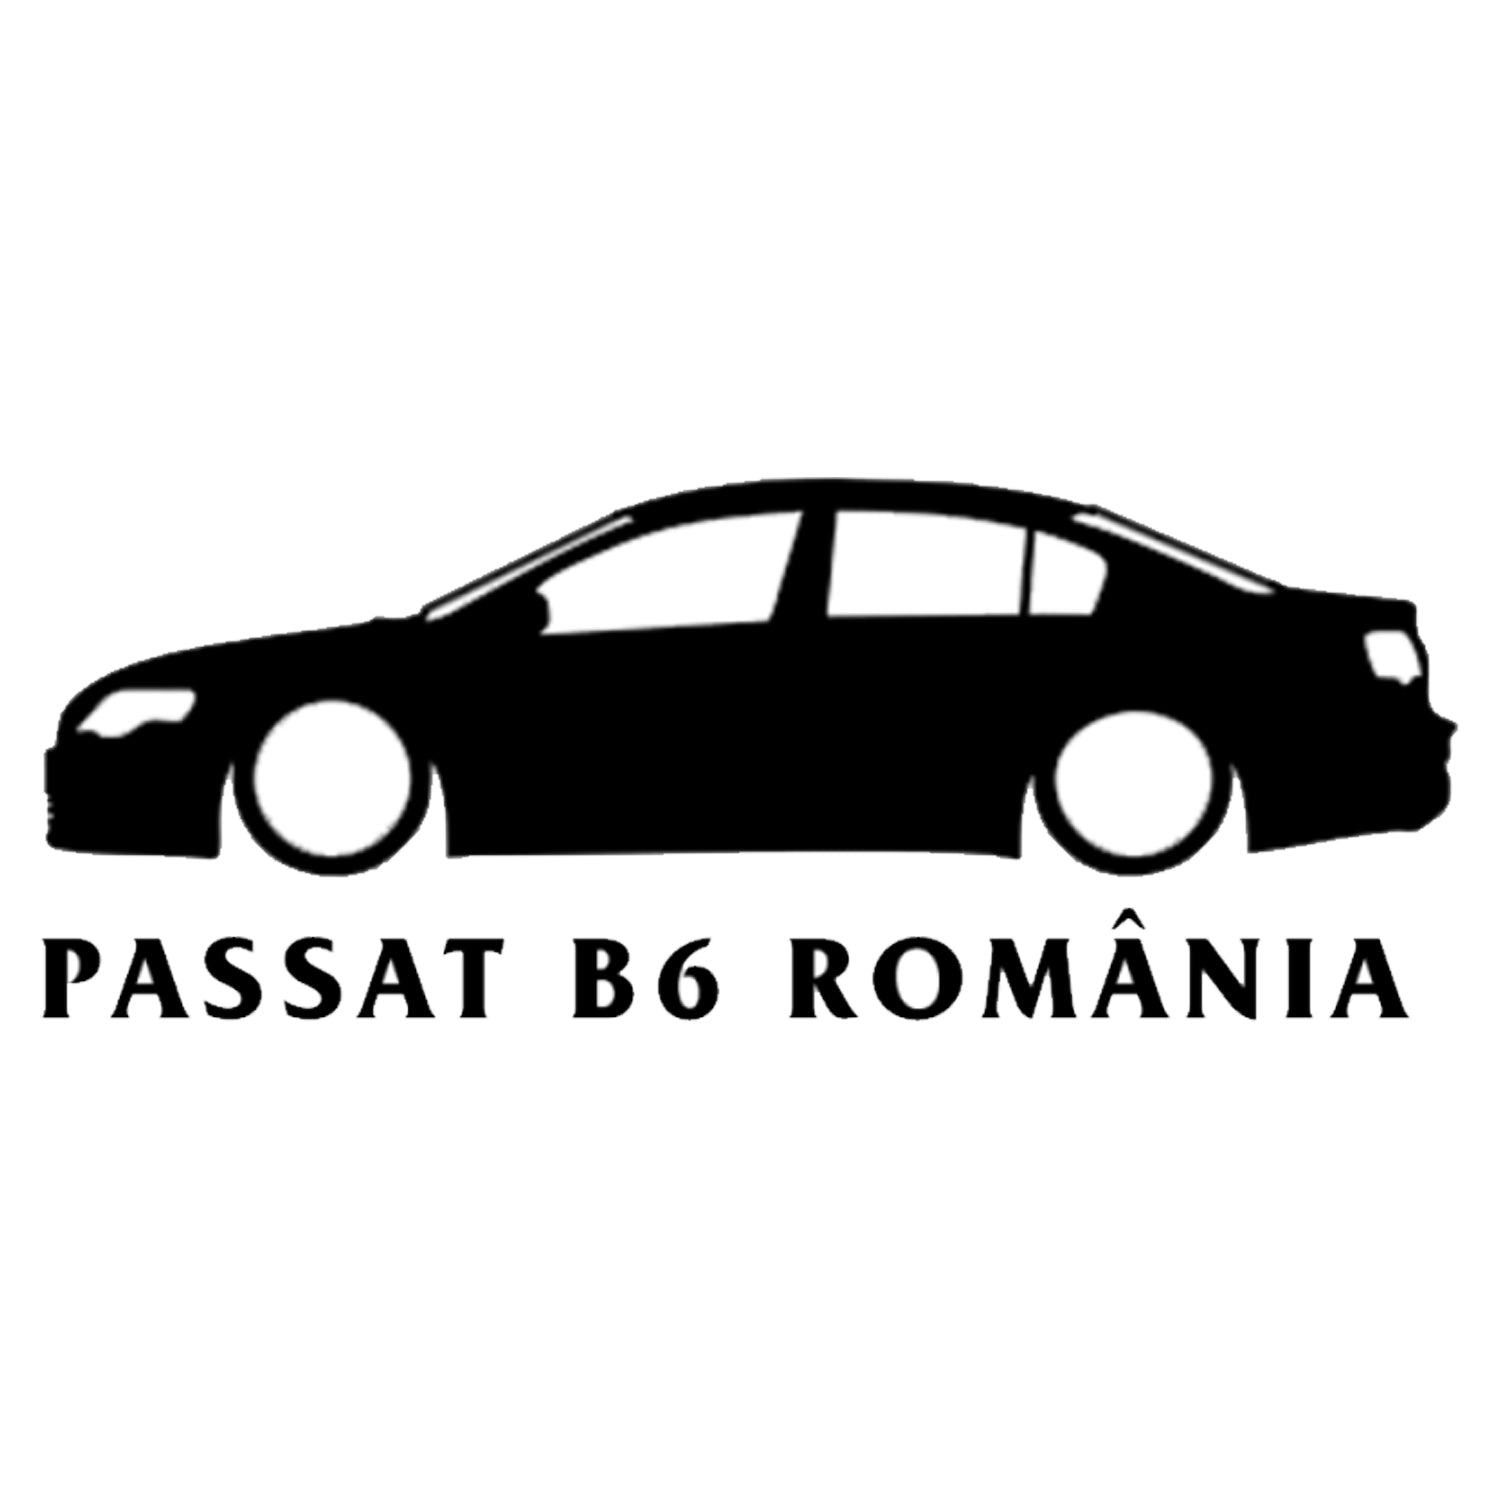 Sticker Passat B6 Romania